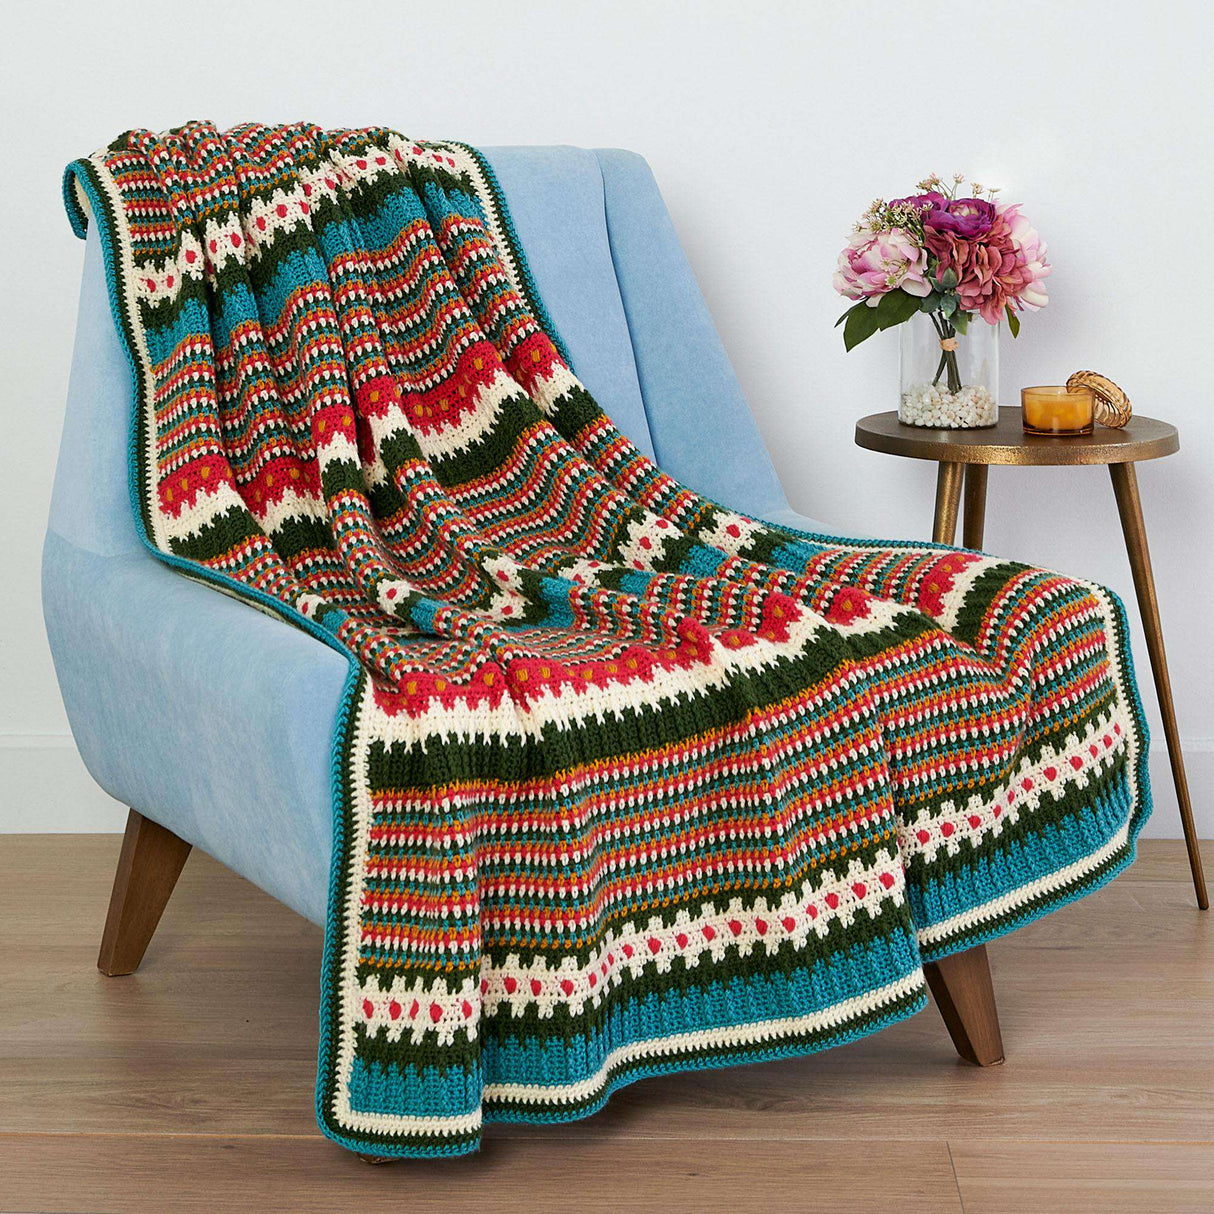 Free Happy Holidays Crochet Blanket Pattern